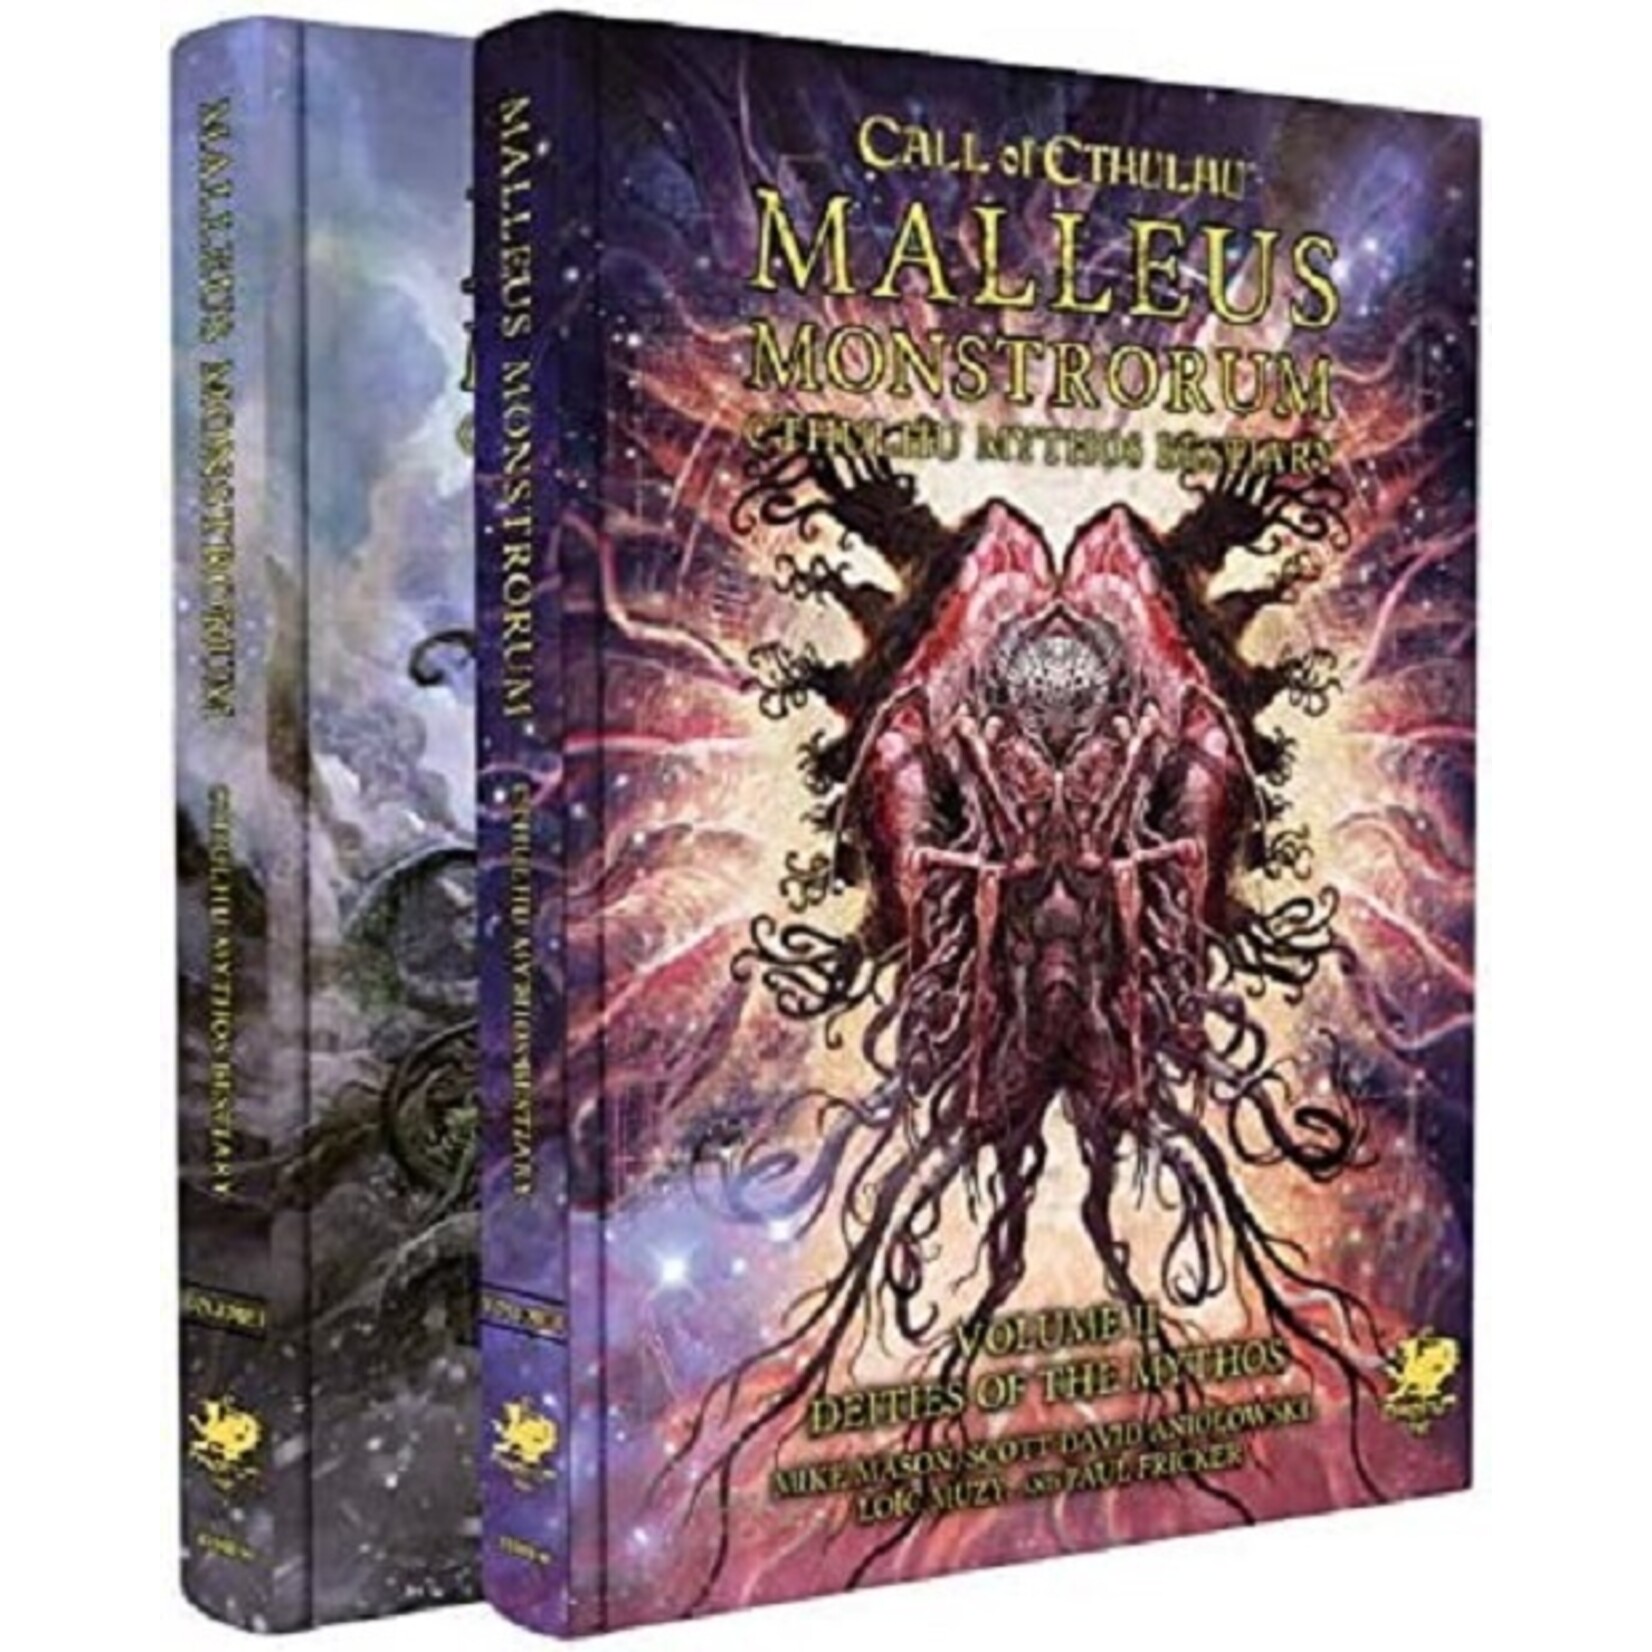 Chaosium Call of Cthulhu RPG Malleus Monstrorum Cthulhu Mythos Bestiary (EN)